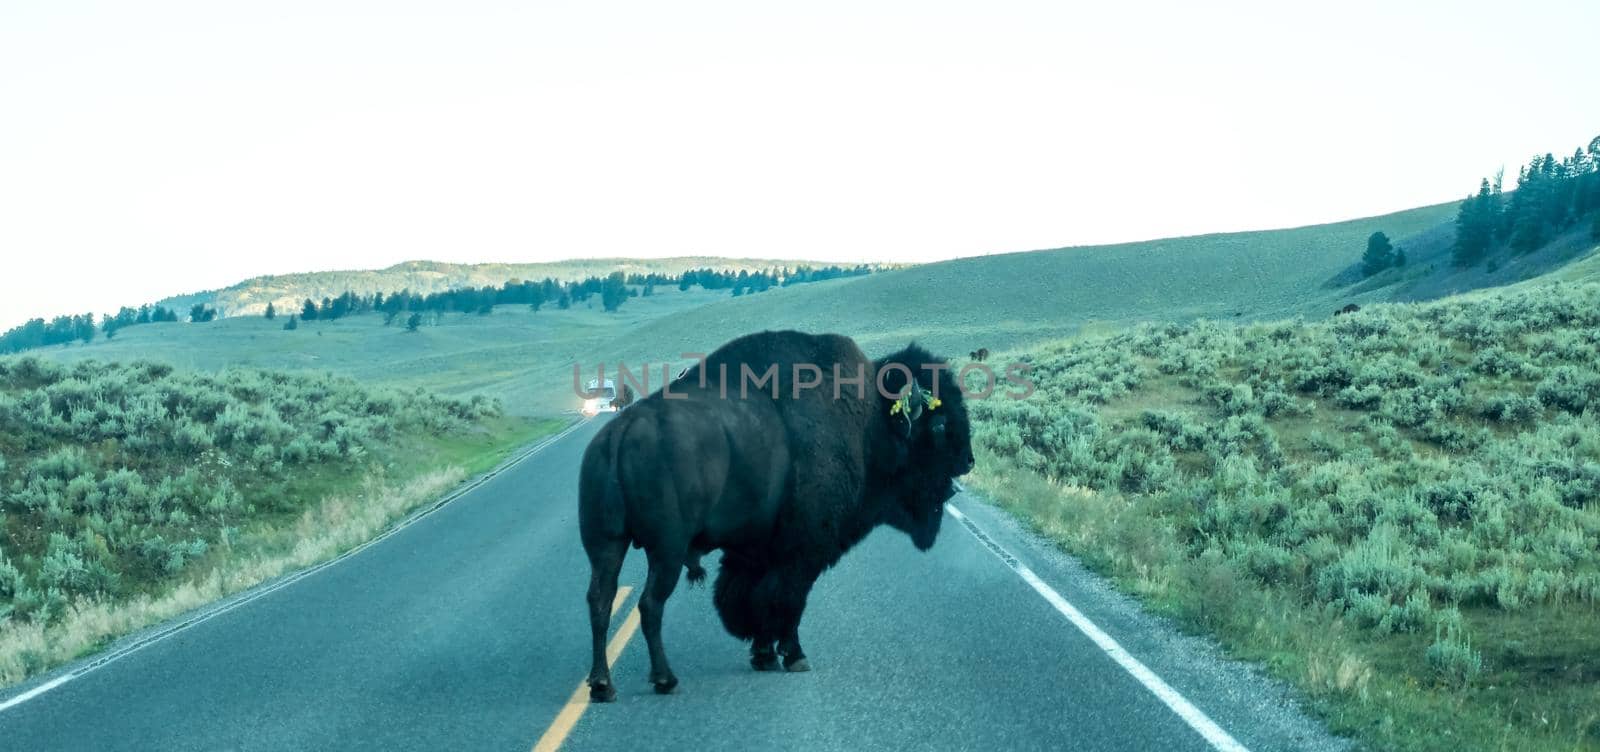 Bison graze in Lamar Valleyat Yellowstone National